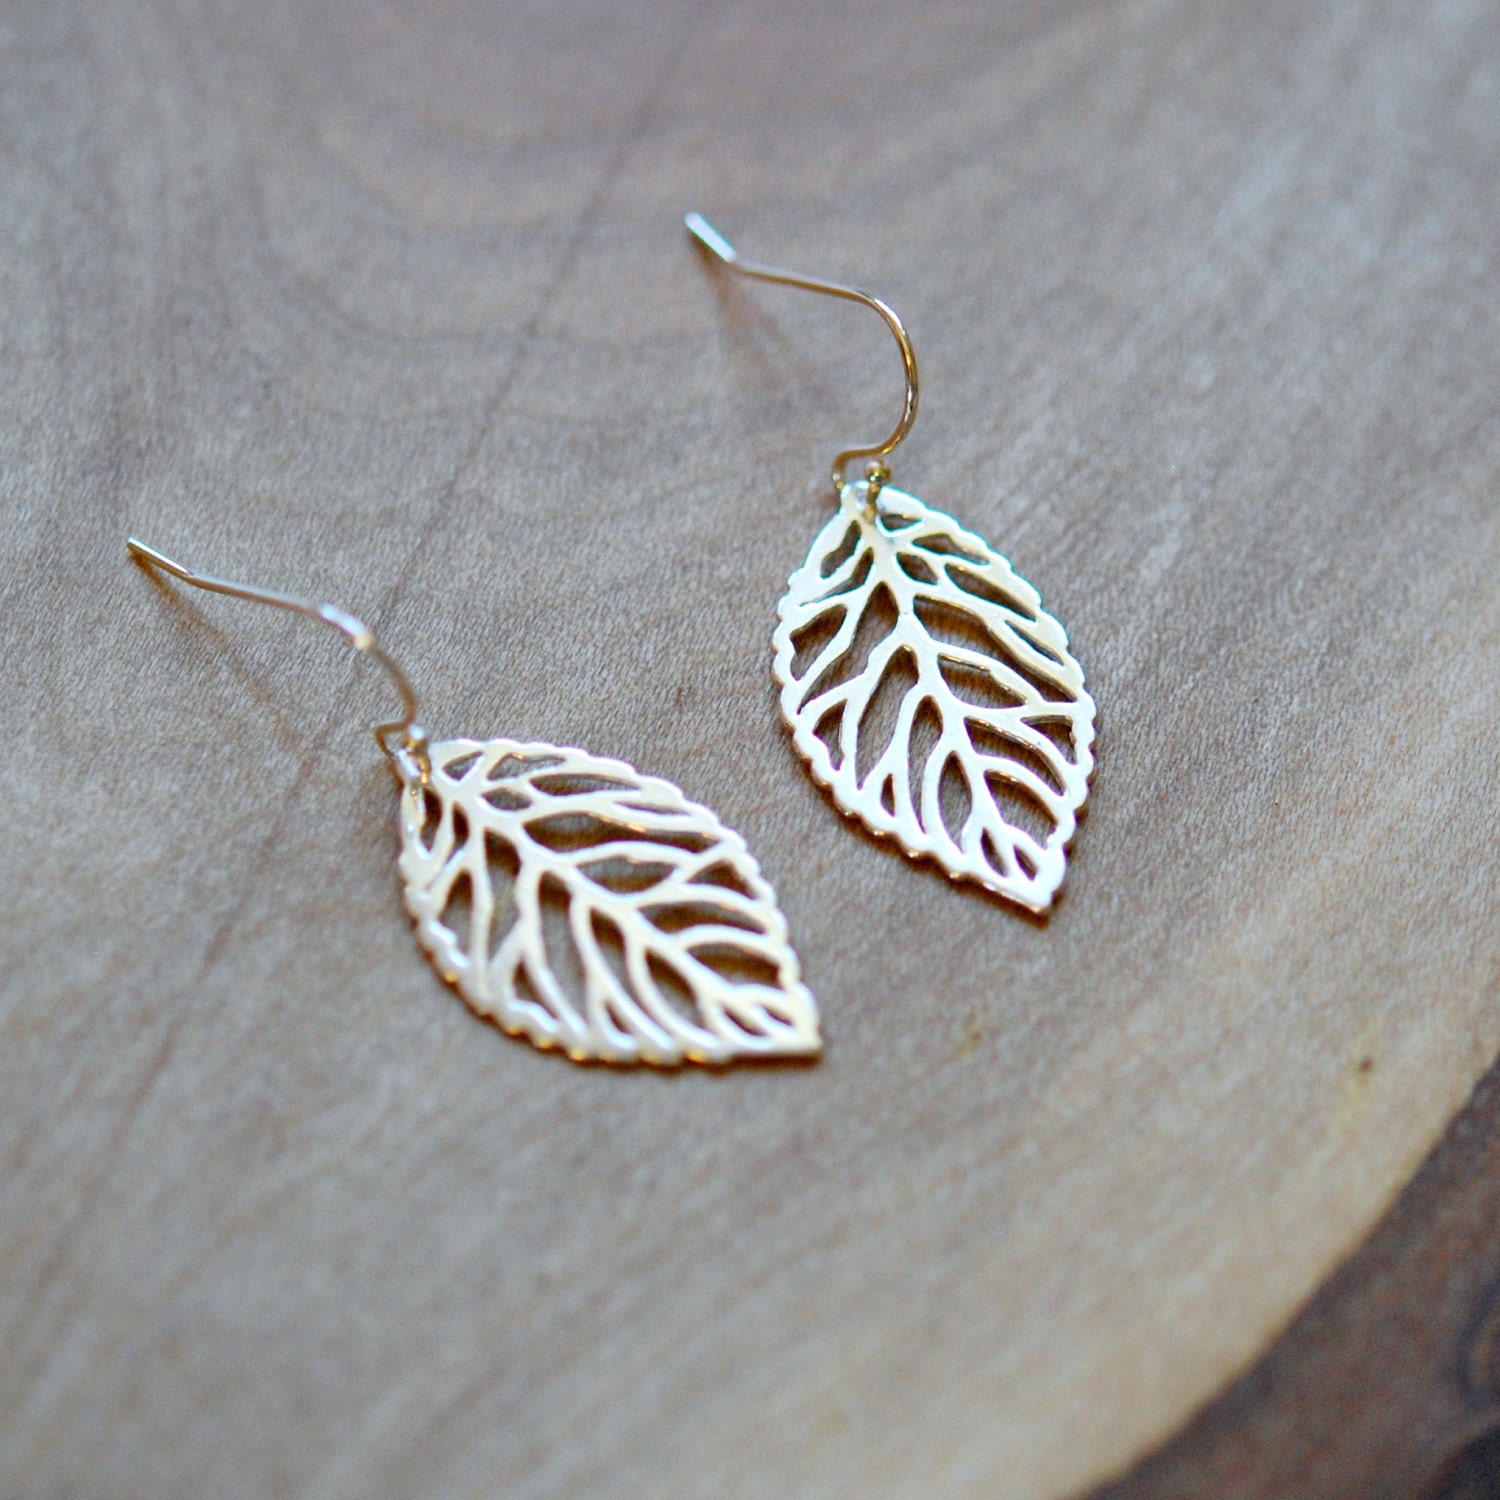 Sterling silver leaf earrings